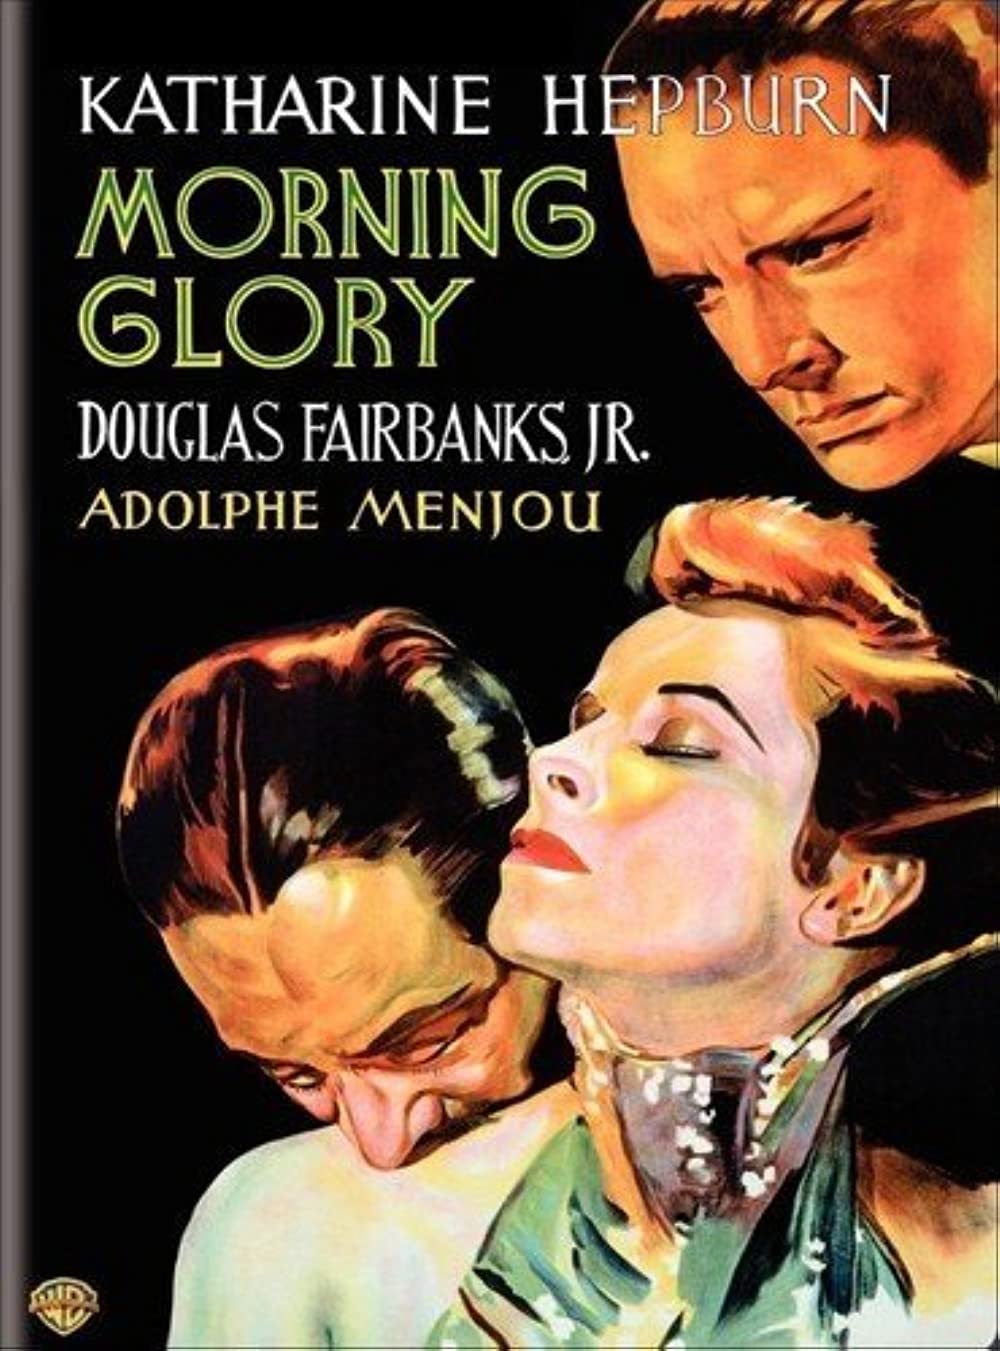 Filmbeschreibung zu Morgenrot (1933)